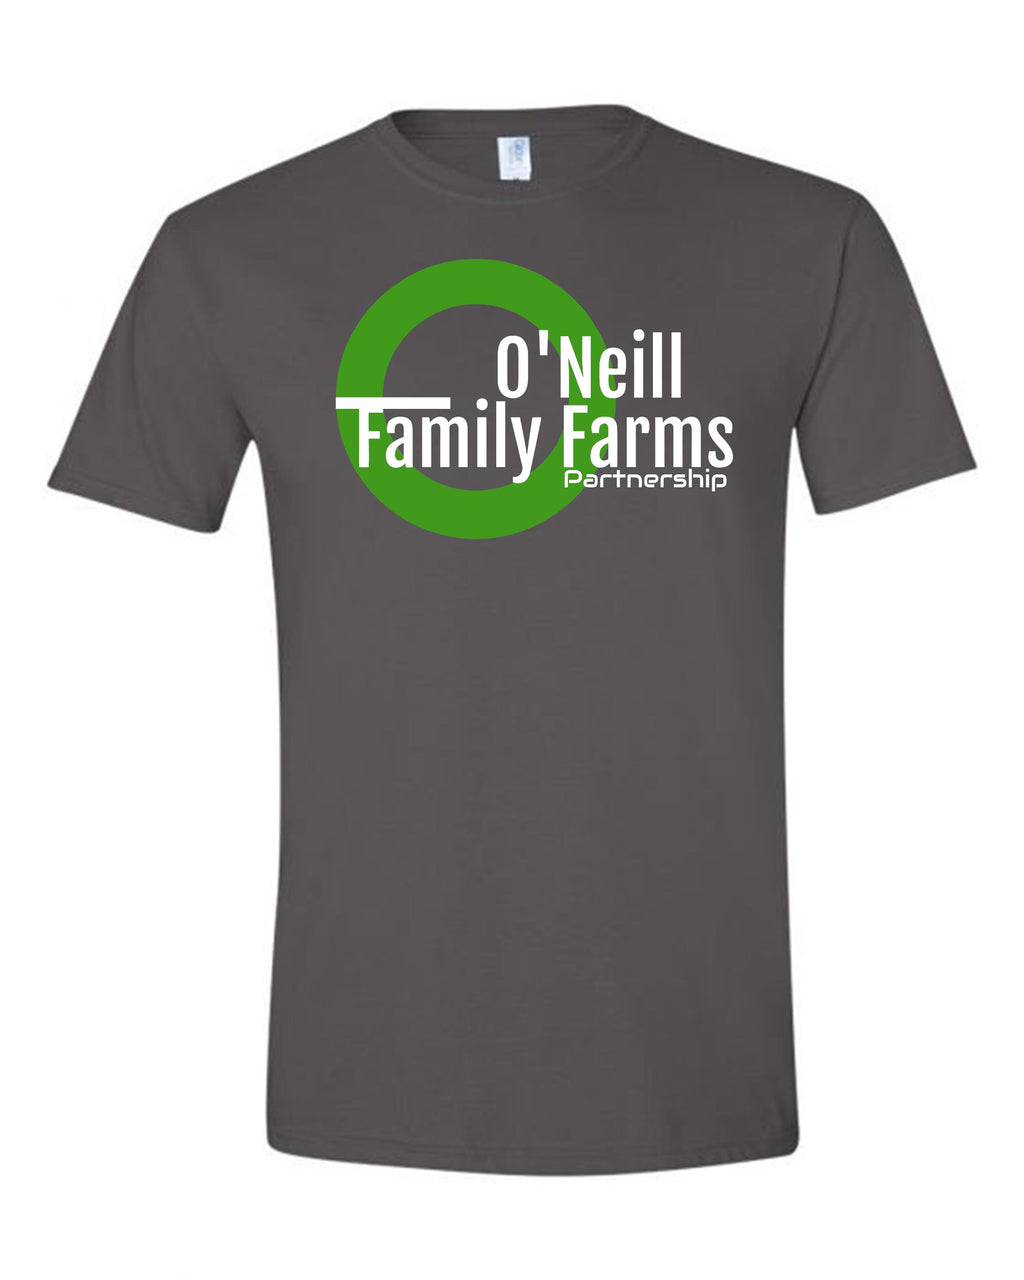 O'neill Family Farms Partnership Bella Canvas